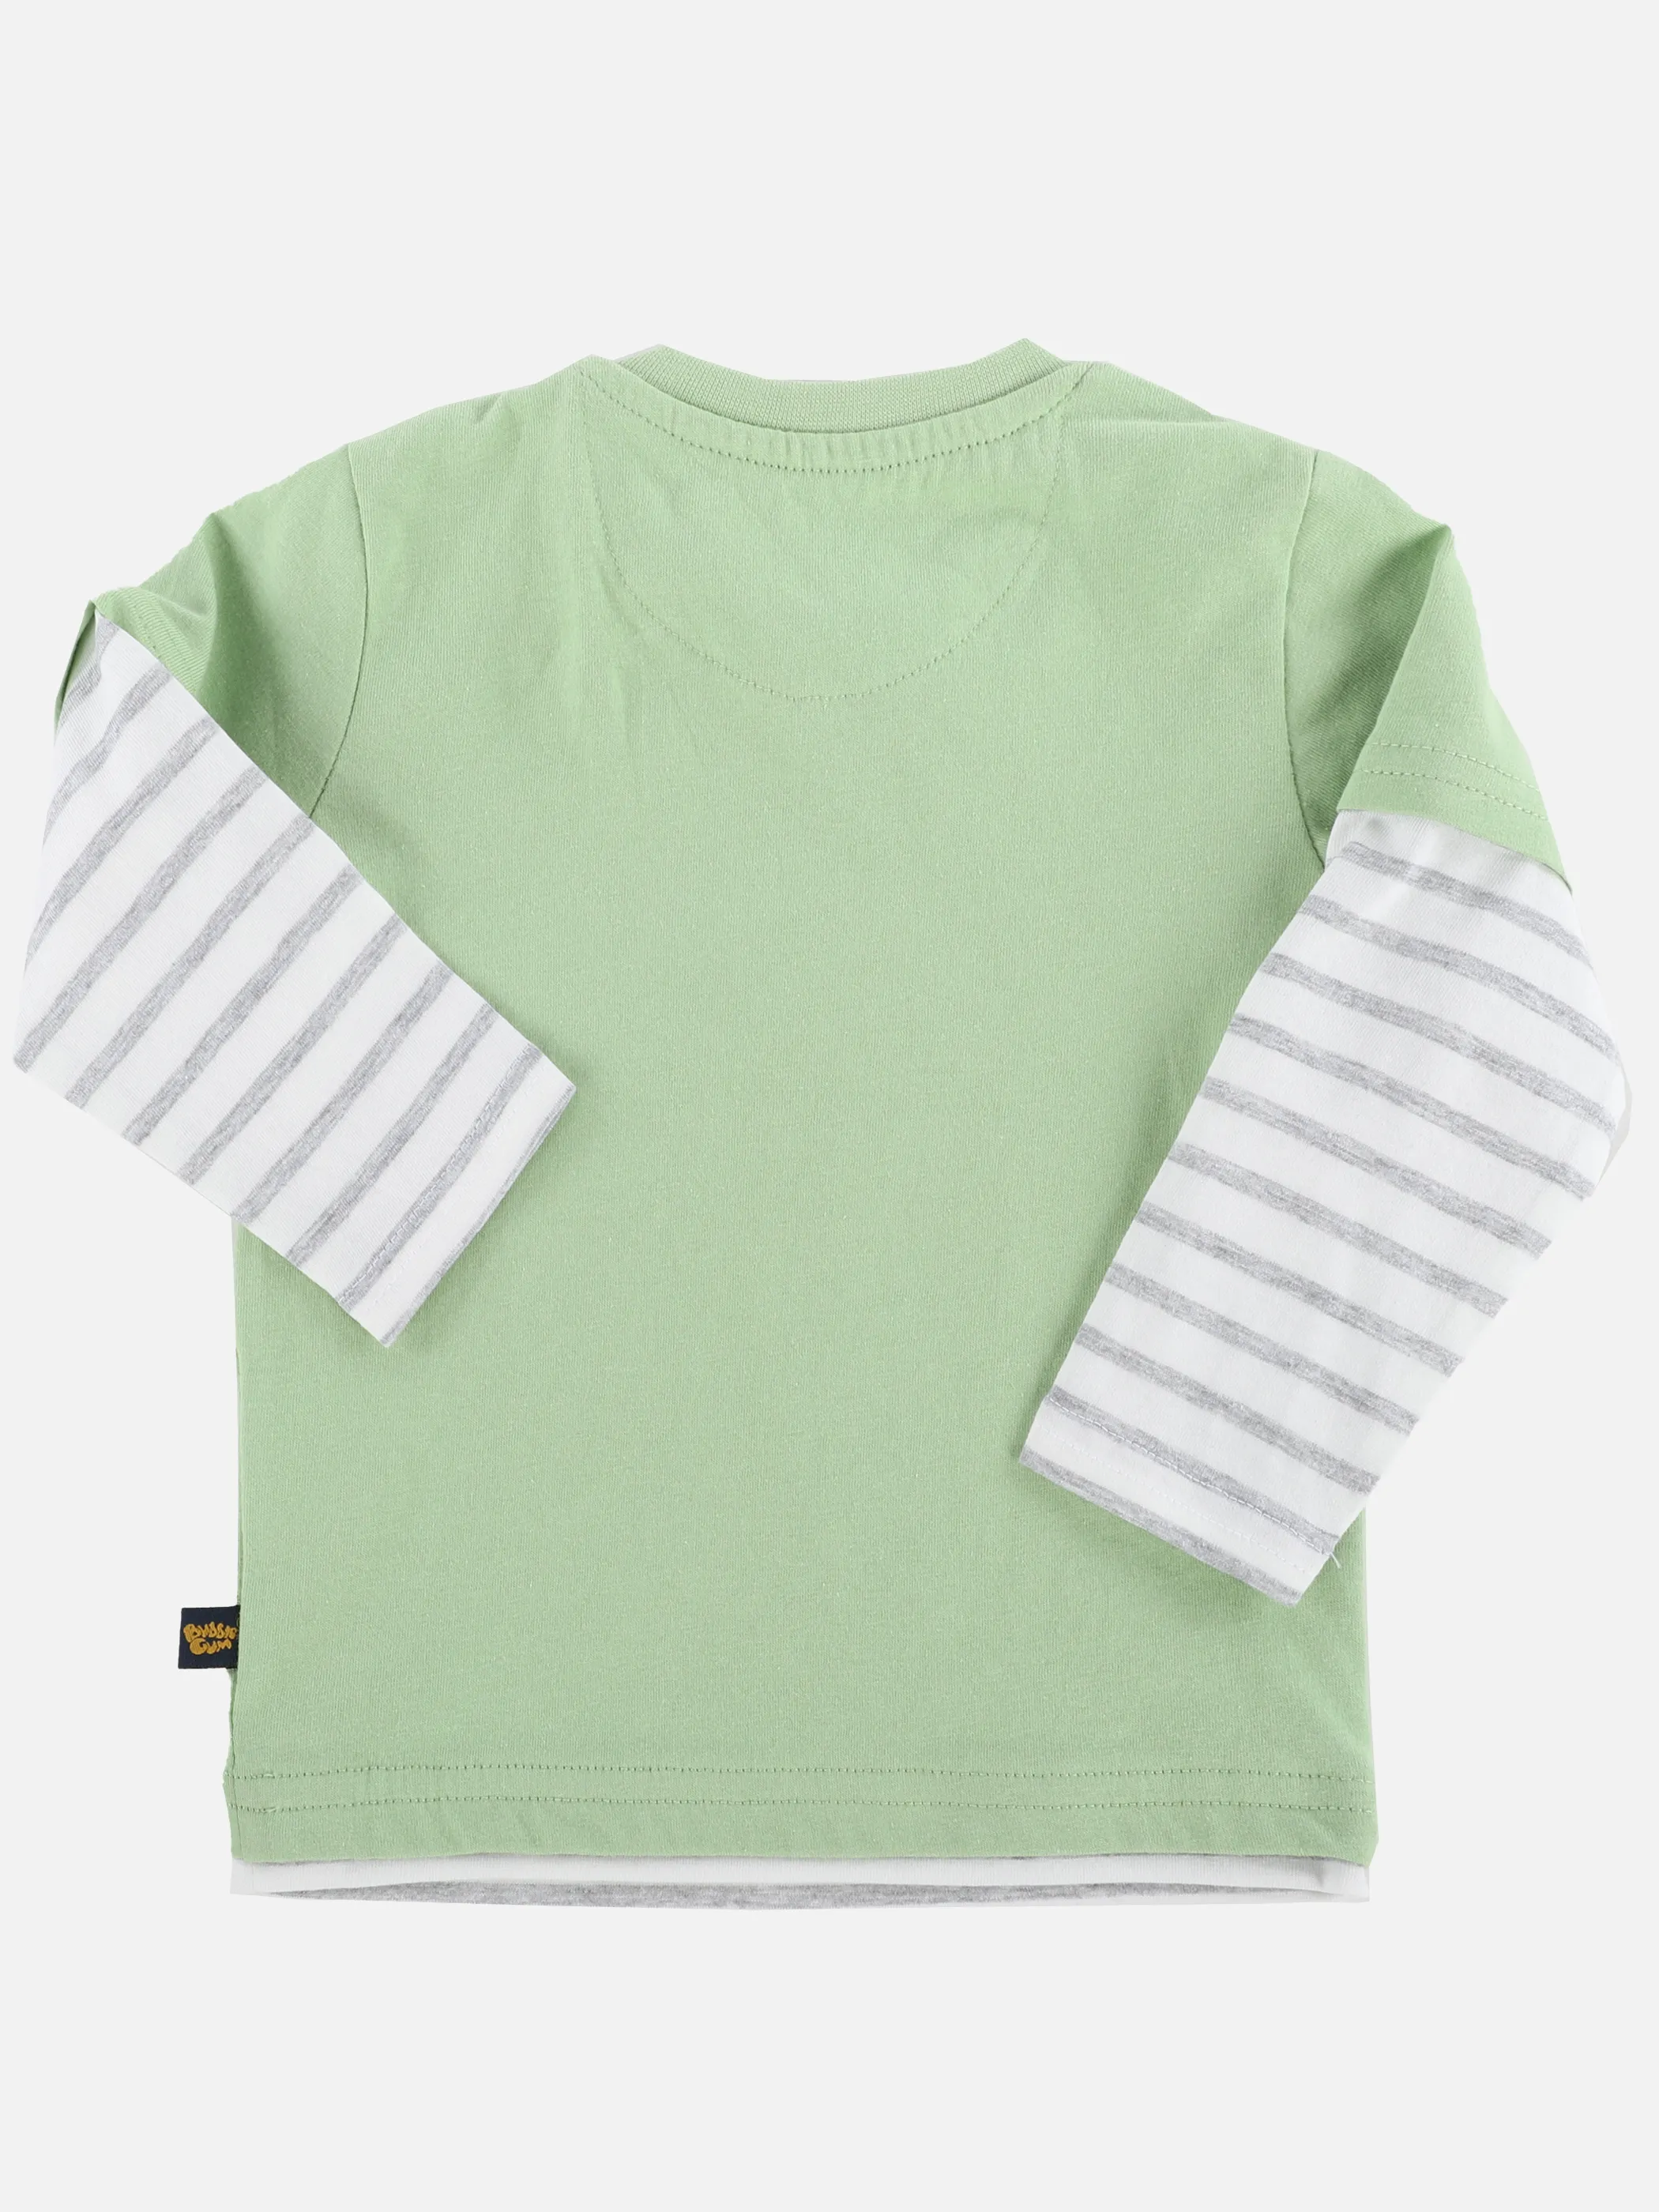 Bubble Gum BJ Longsleeve Shirt mit Dino Frontdruck in grün Grün 890211 GRÜN 2